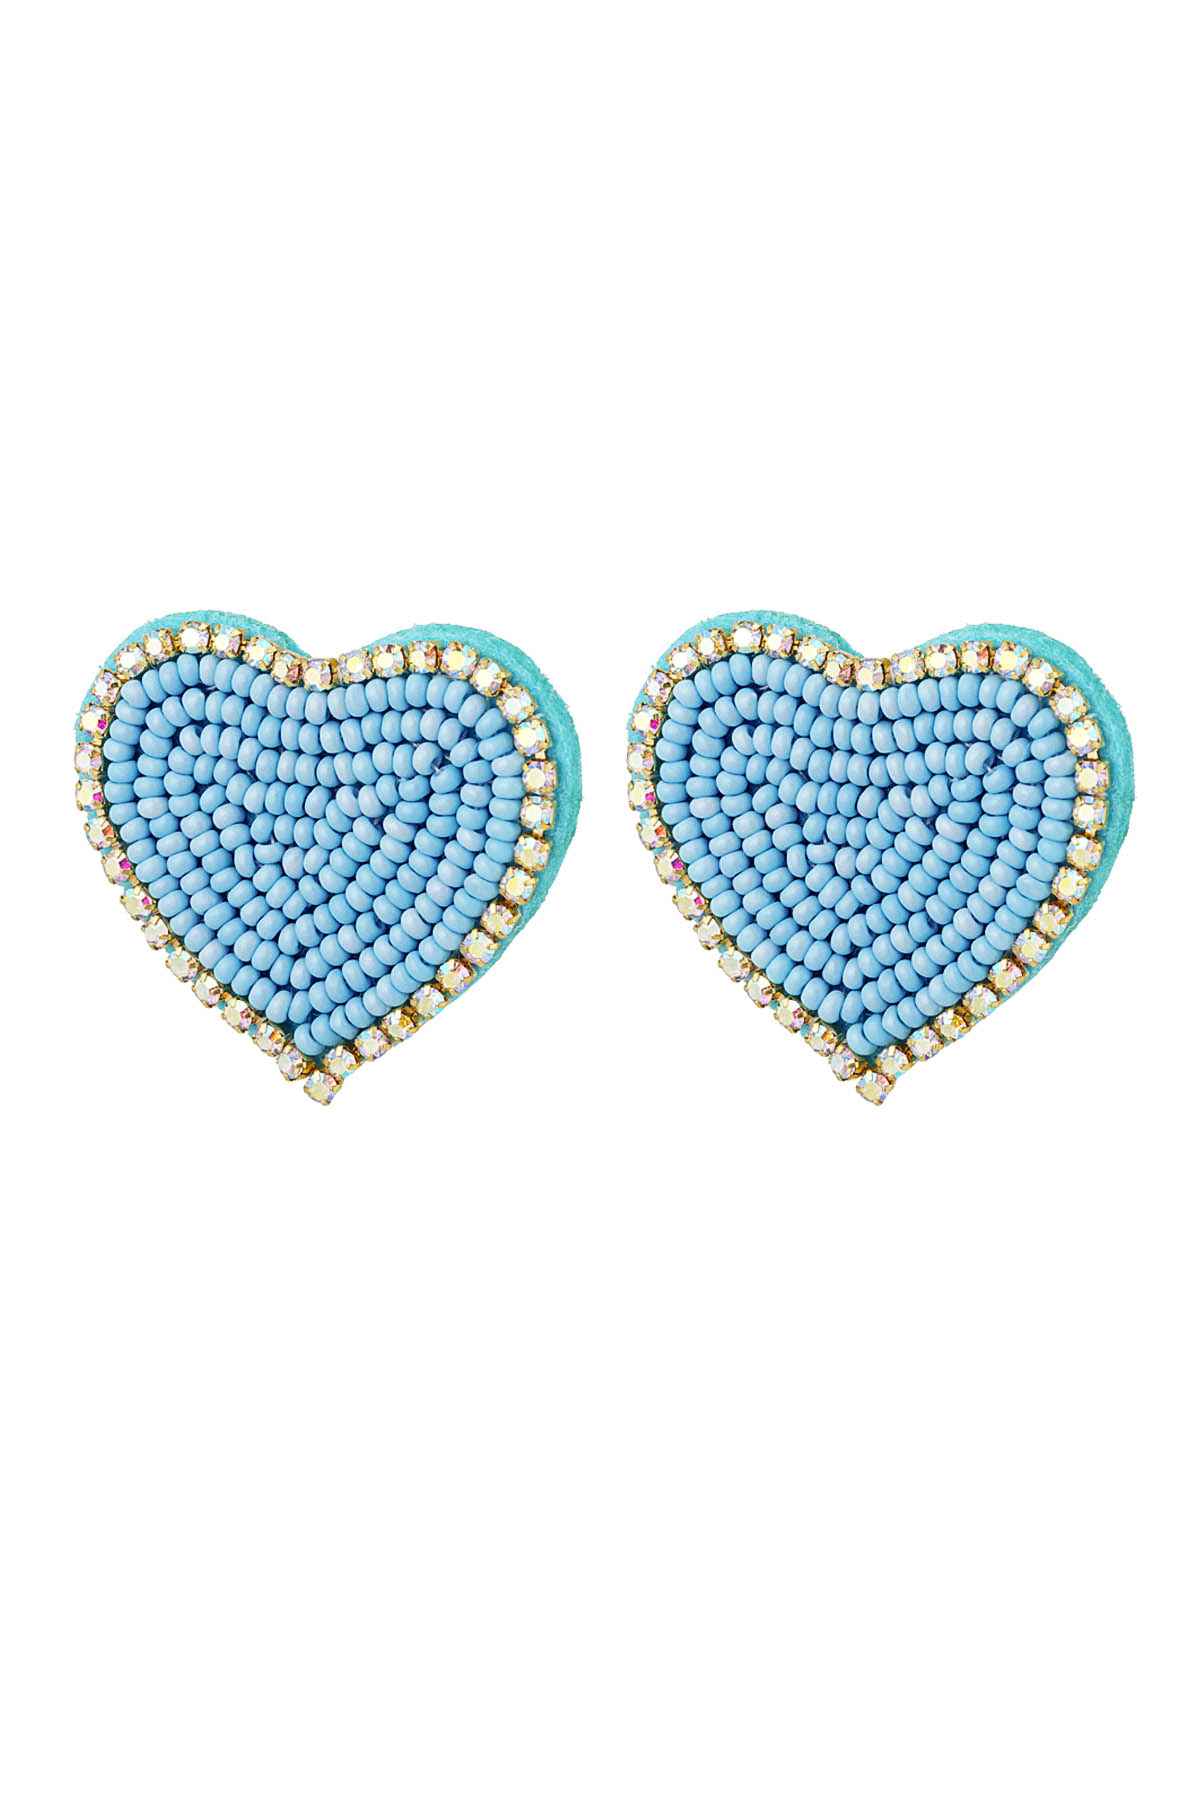 Boucles d'oreilles perlées coeur avec strass Bleu Glass h5 